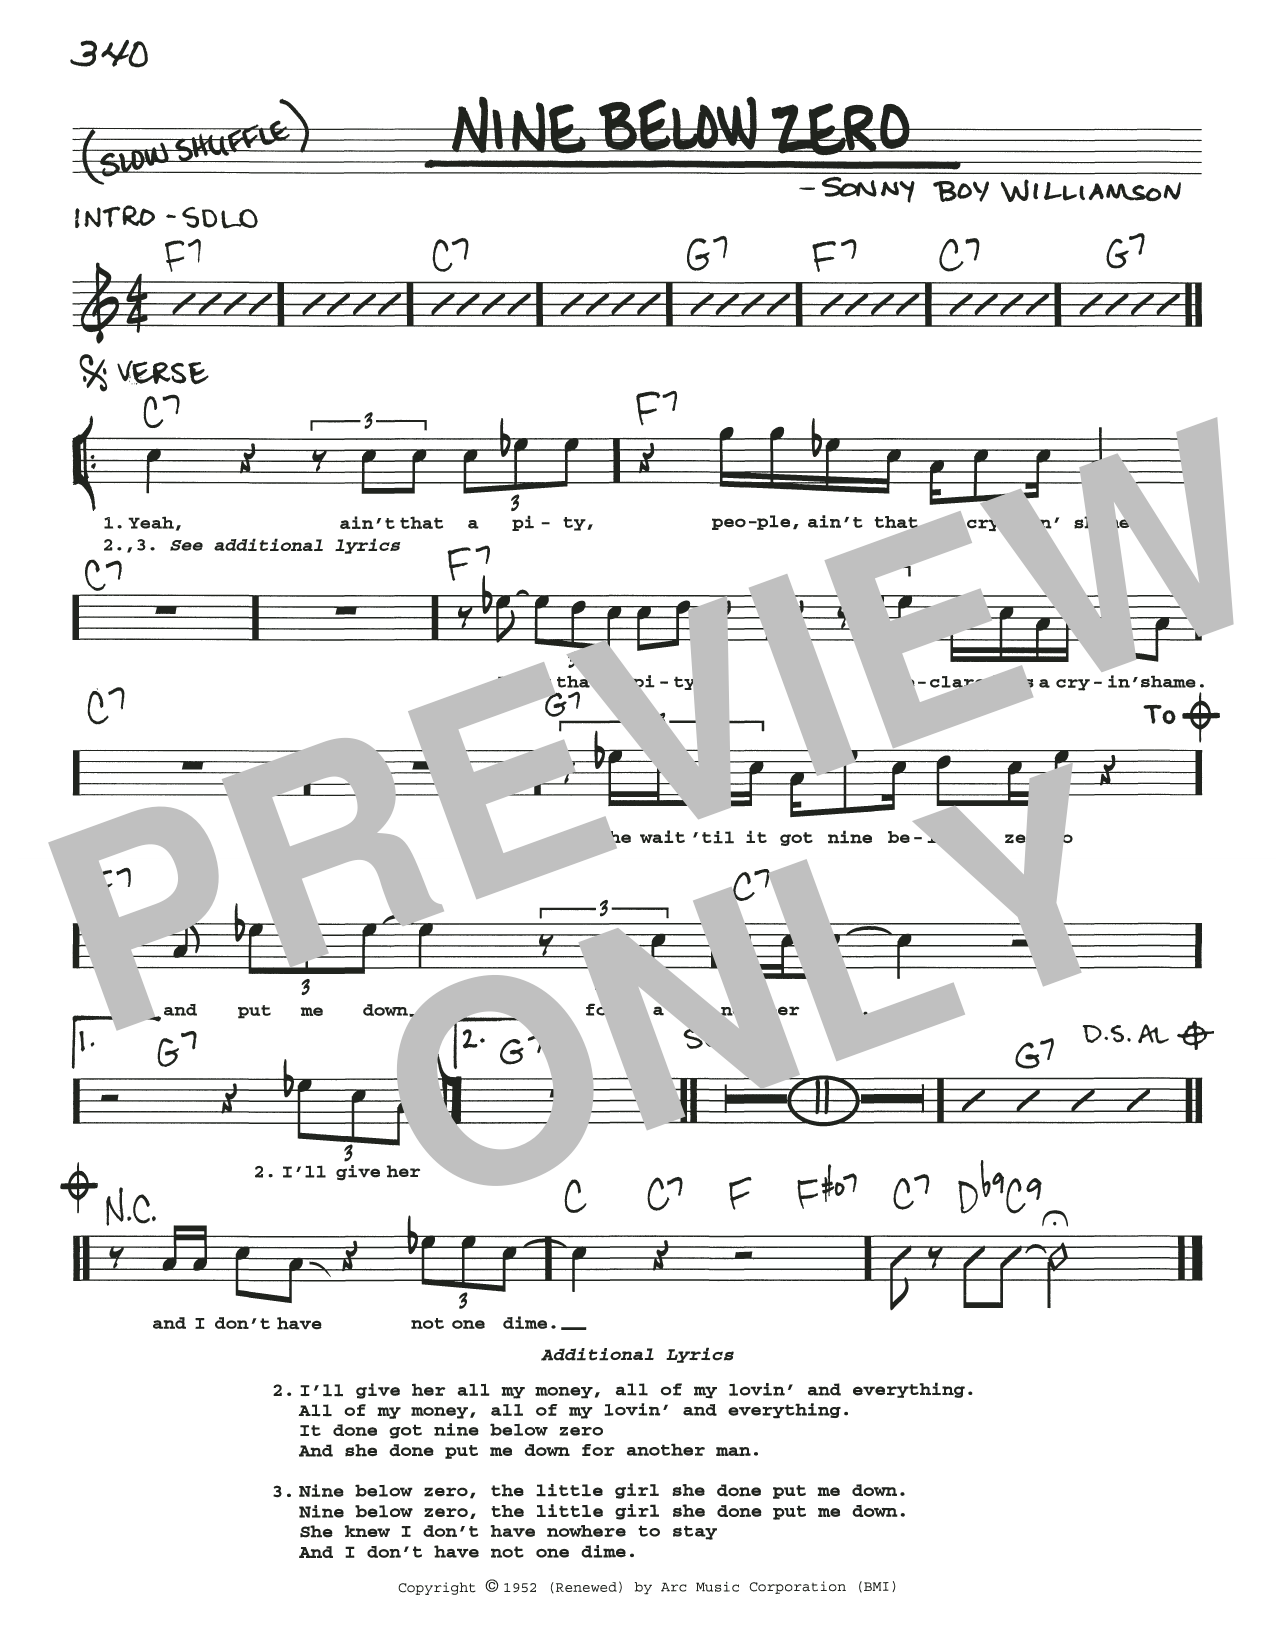 Sonny Boy Williamson Nine Below Zero Sheet Music Notes & Chords for Real Book – Melody, Lyrics & Chords - Download or Print PDF